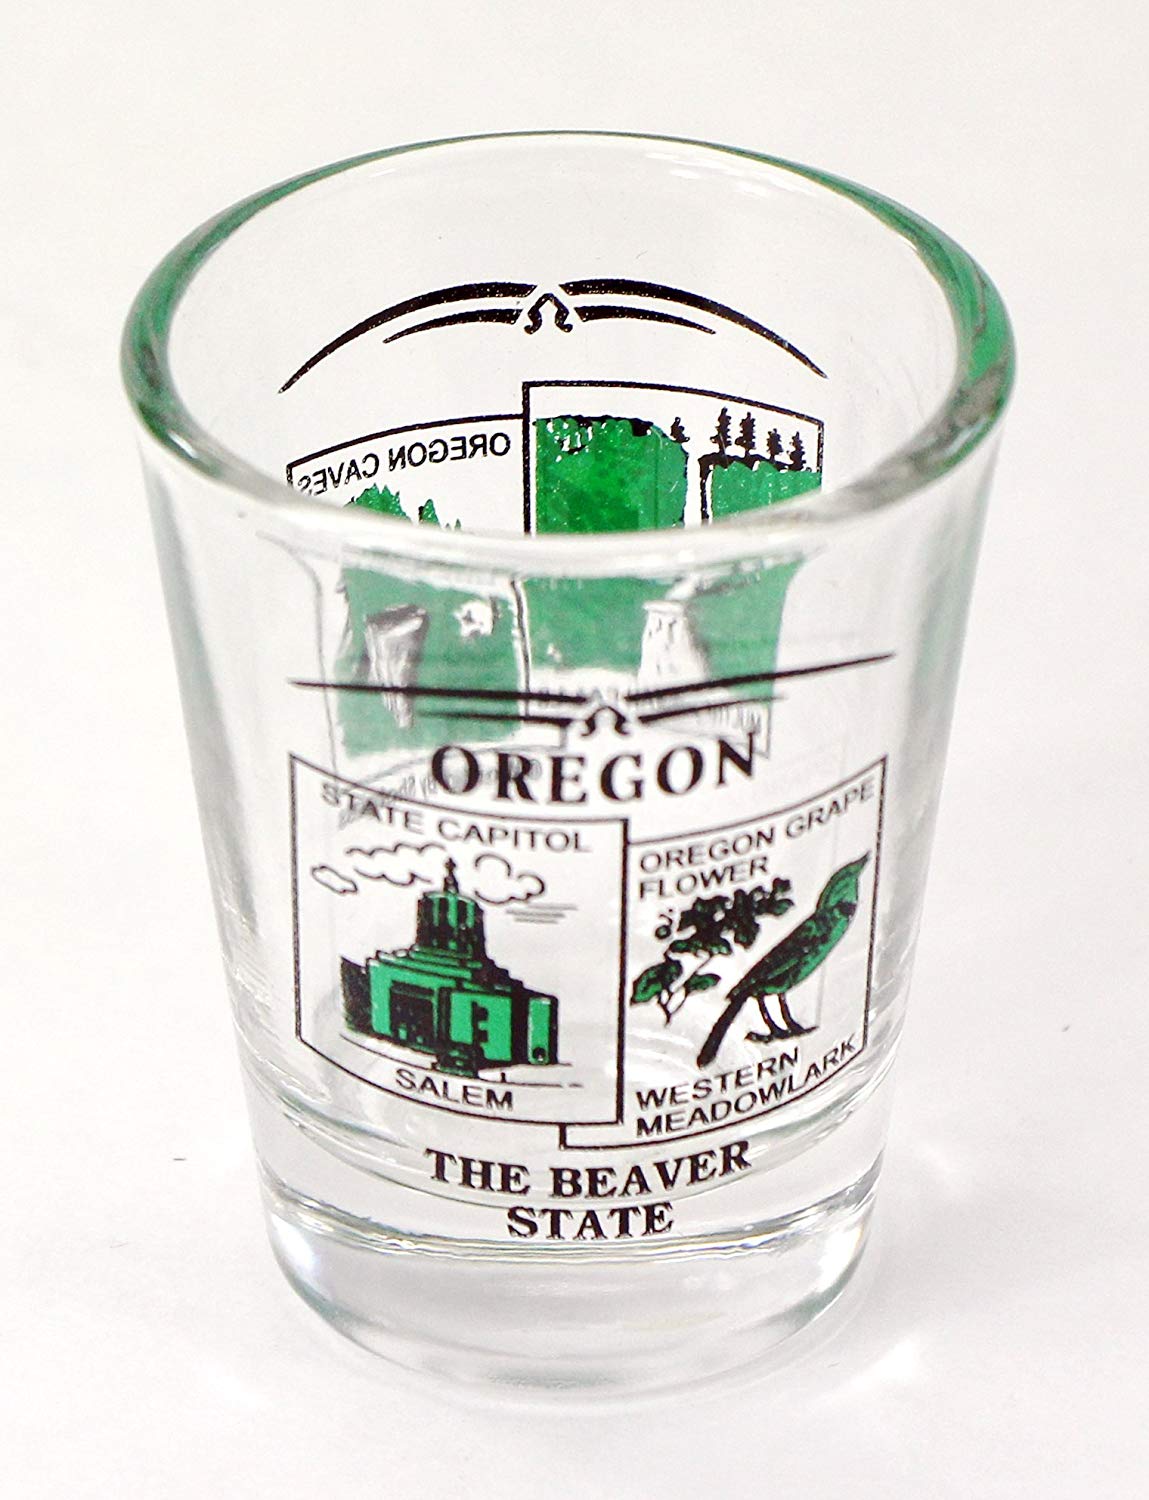 Oregon State Scenery Green New Shot Glass